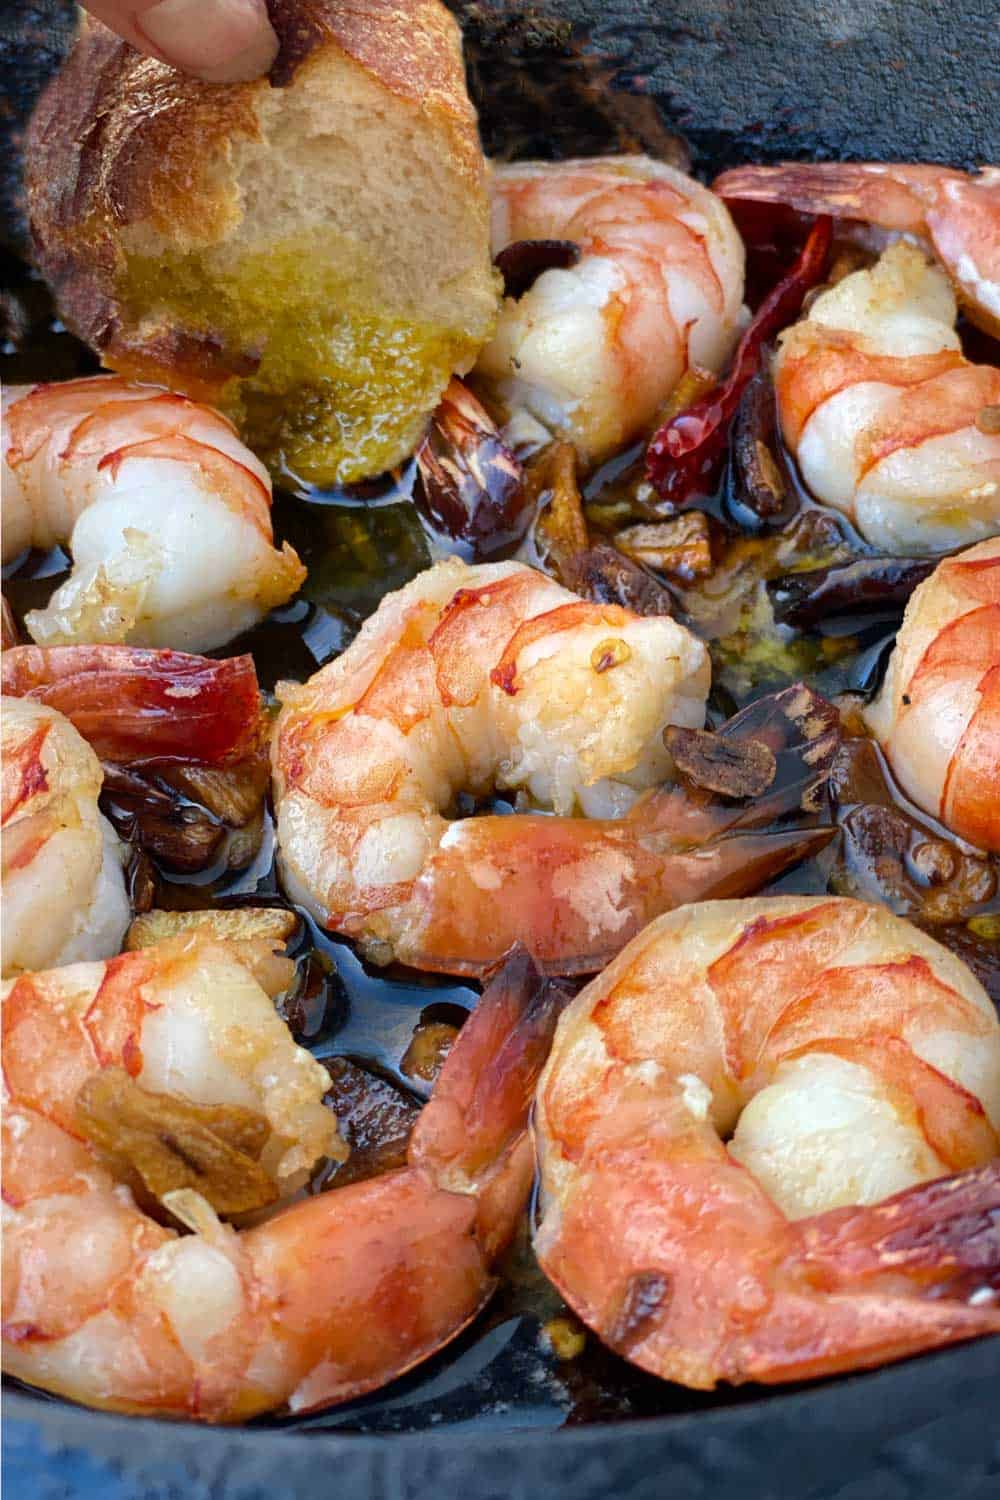 https://www.panningtheglobe.com/wp-content/uploads/2019/12/garlic-shrimp-bread.jpg